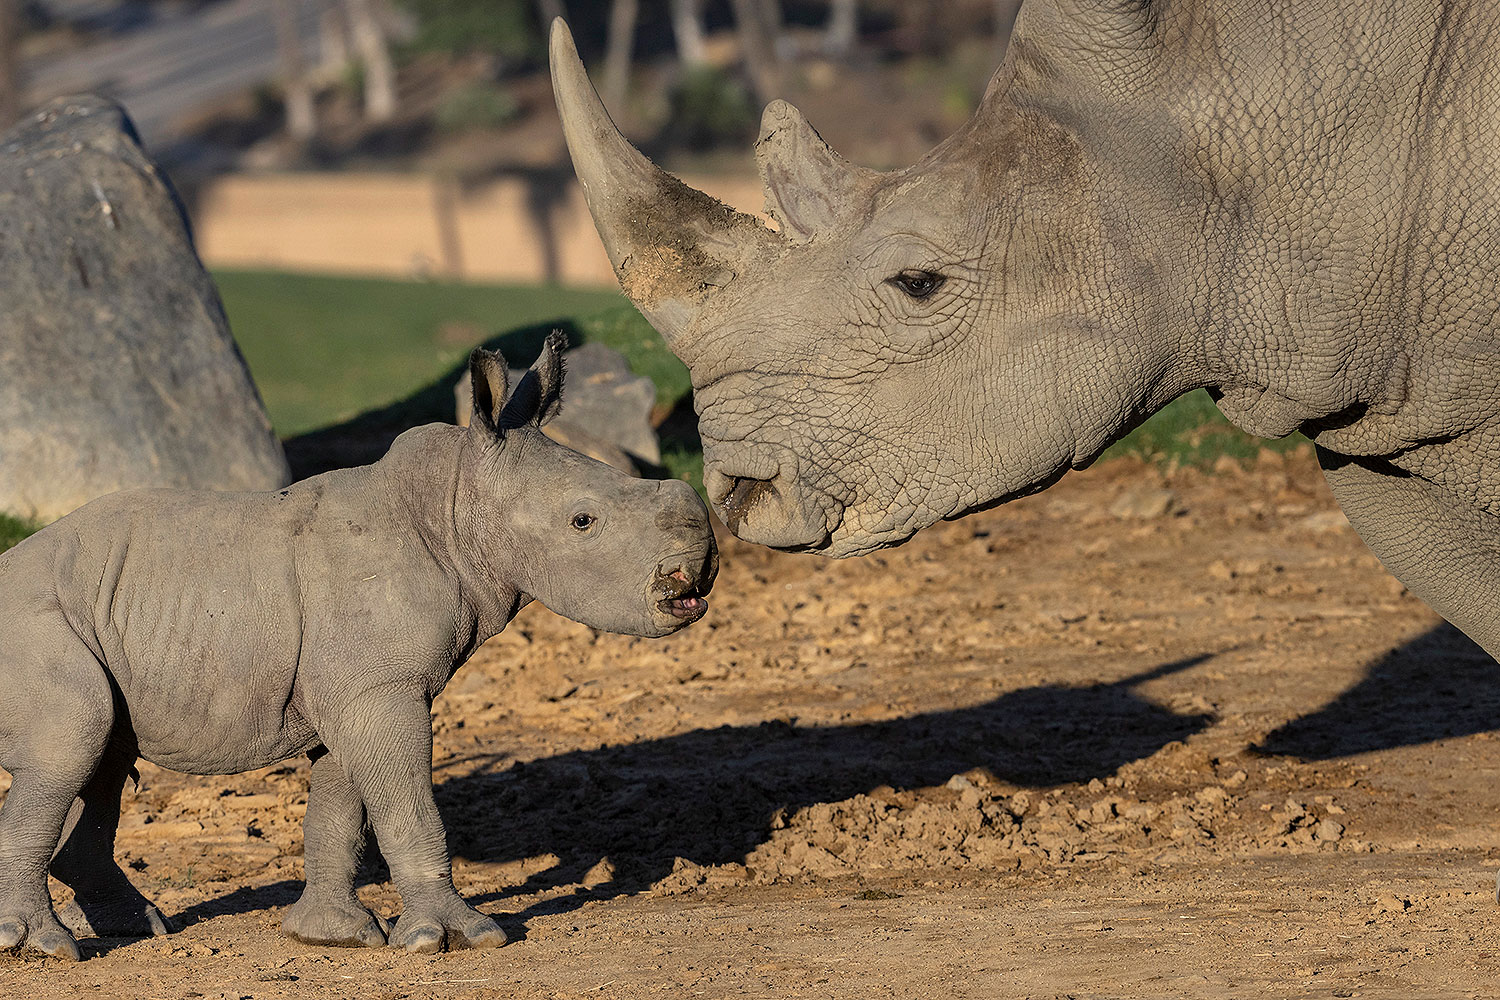 Rhino mother and rhino calf touching noses